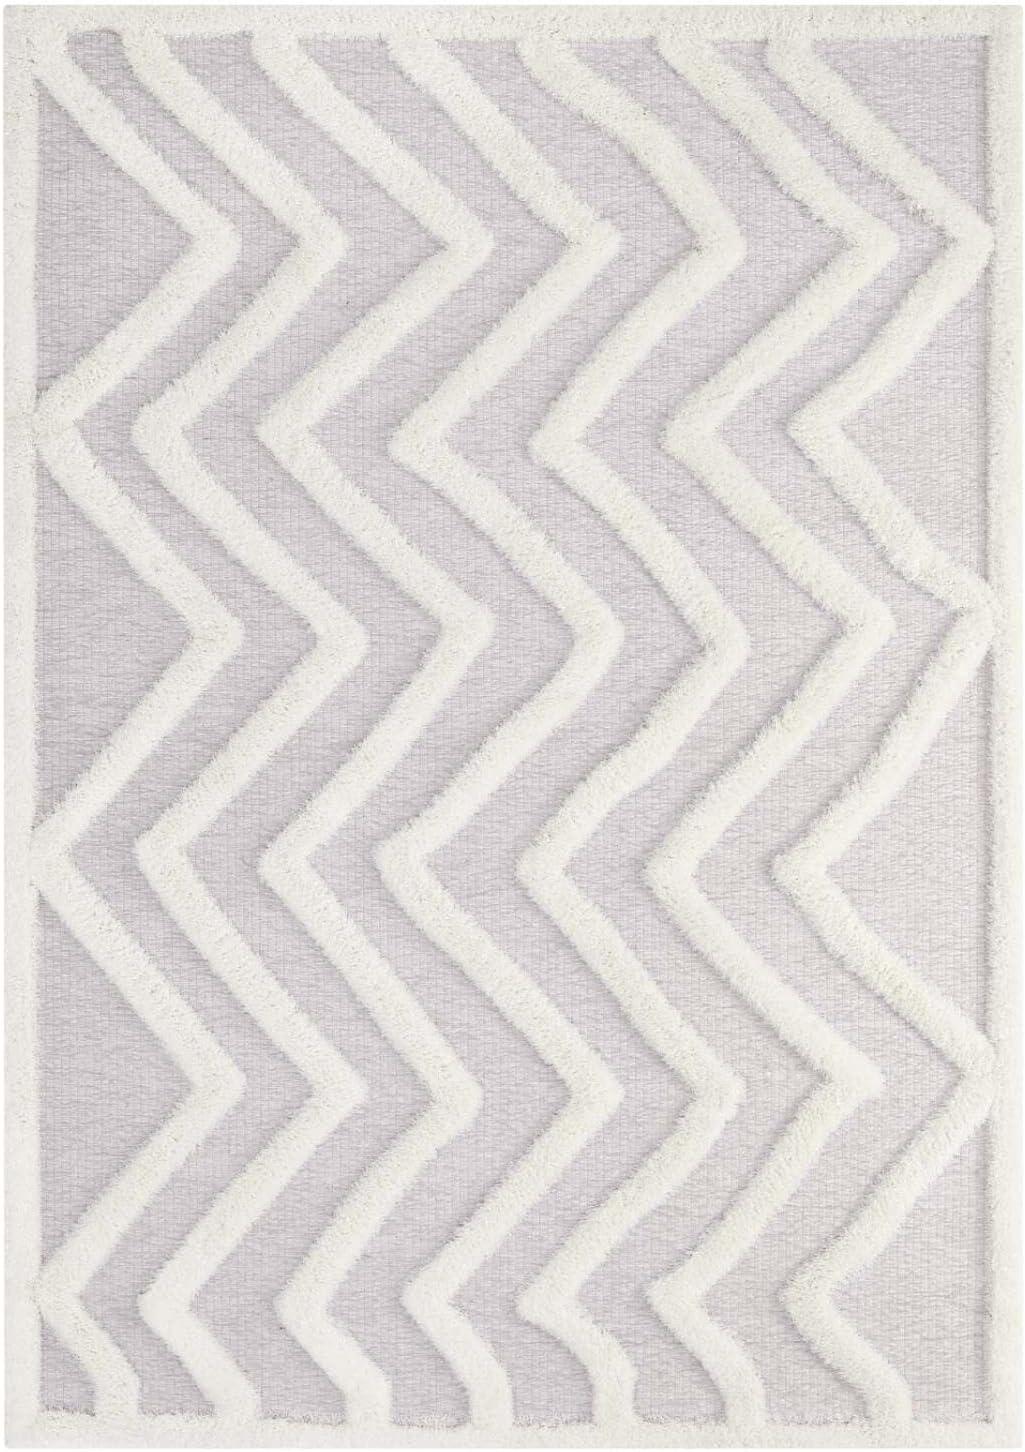 Ivory and Light Gray Abstract Chevron Soft Shag 5'x8' Area Rug